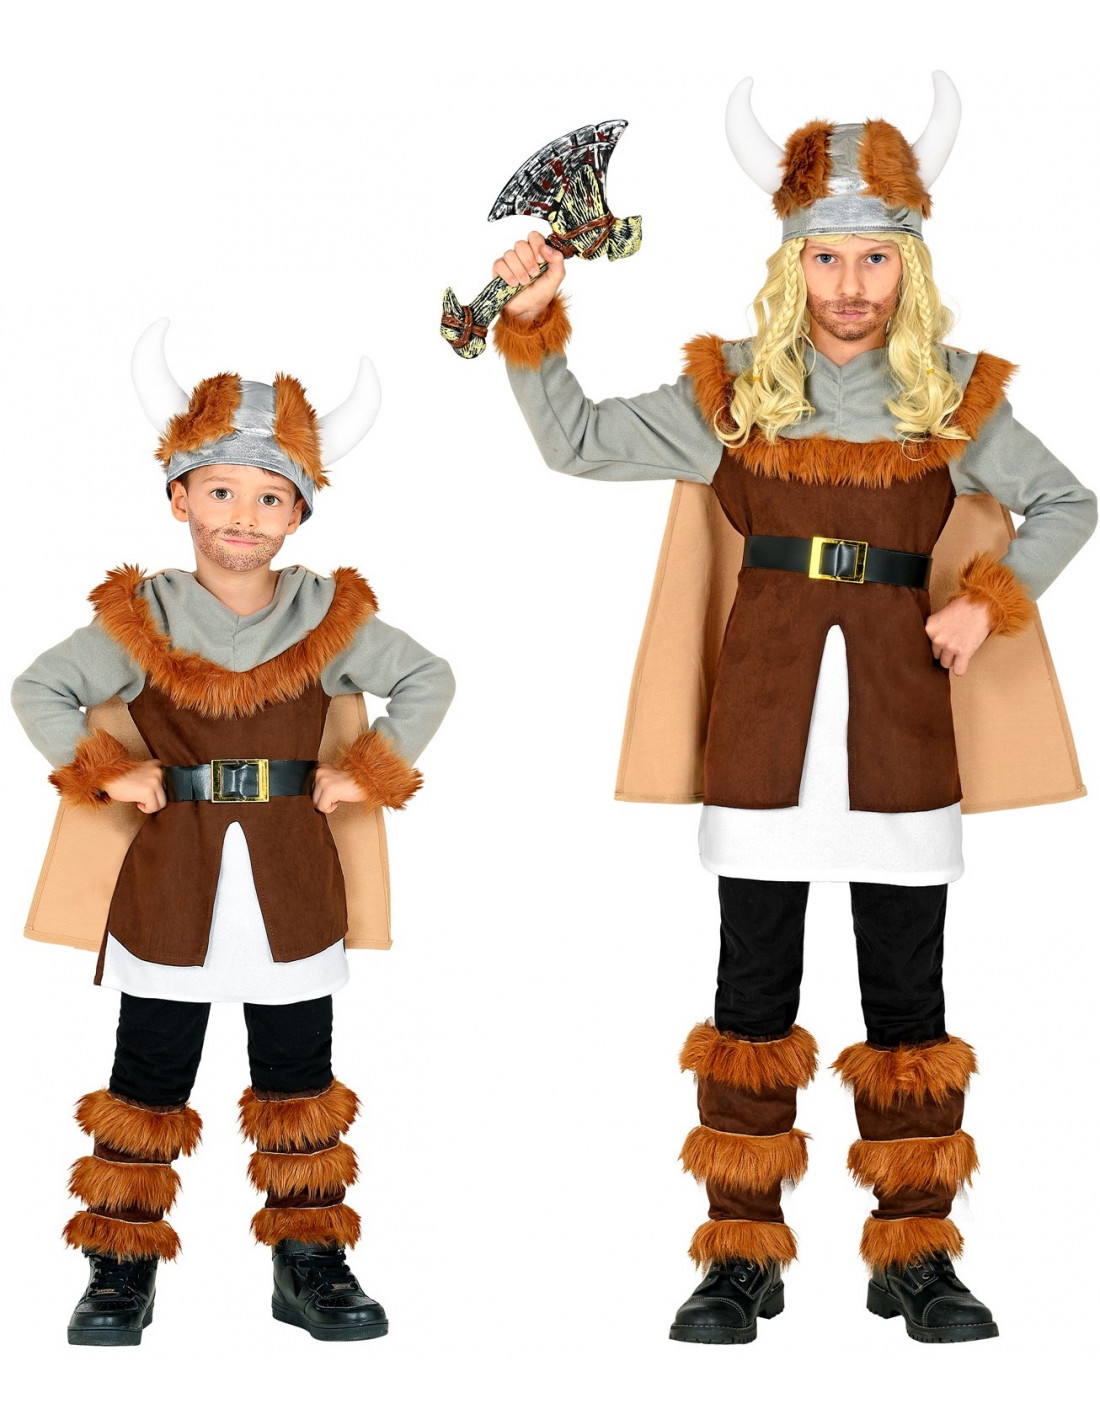 ▷ Kit accesorios para disfraz Vikingo niño【Envío en 24h】